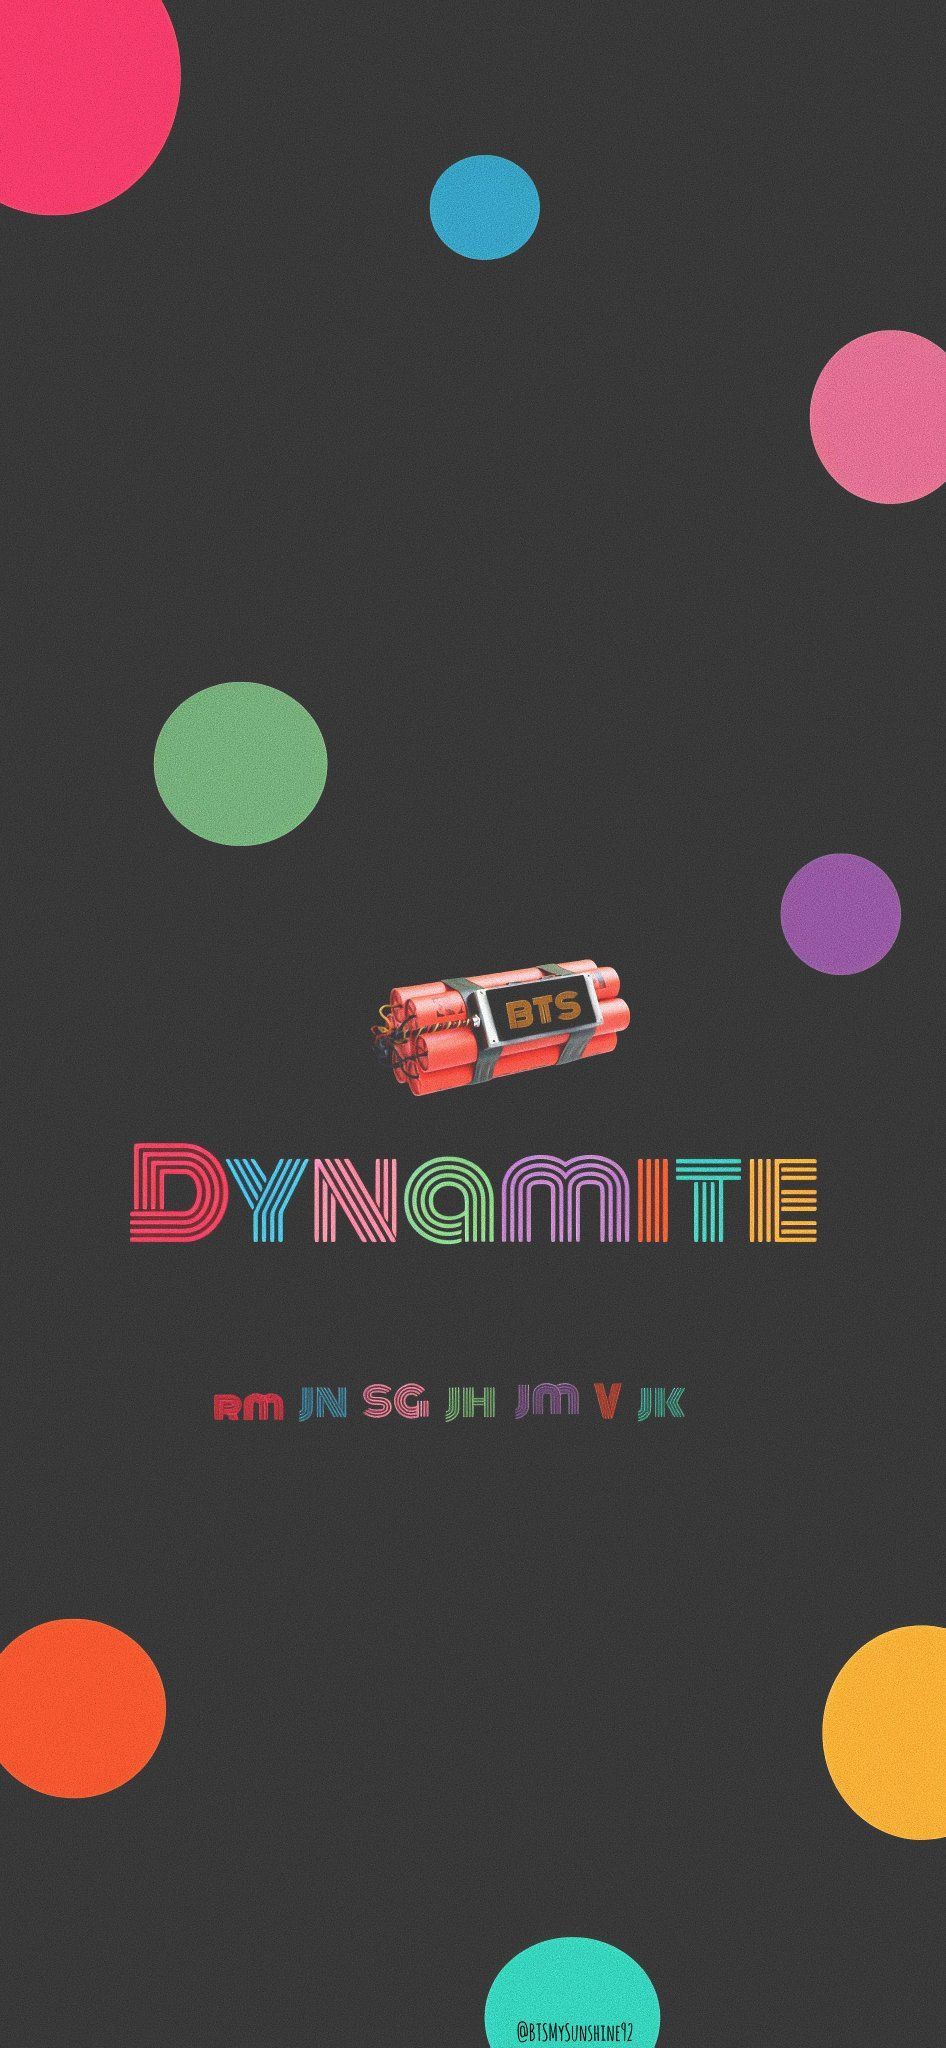 Bts Dynamite Album Release Date